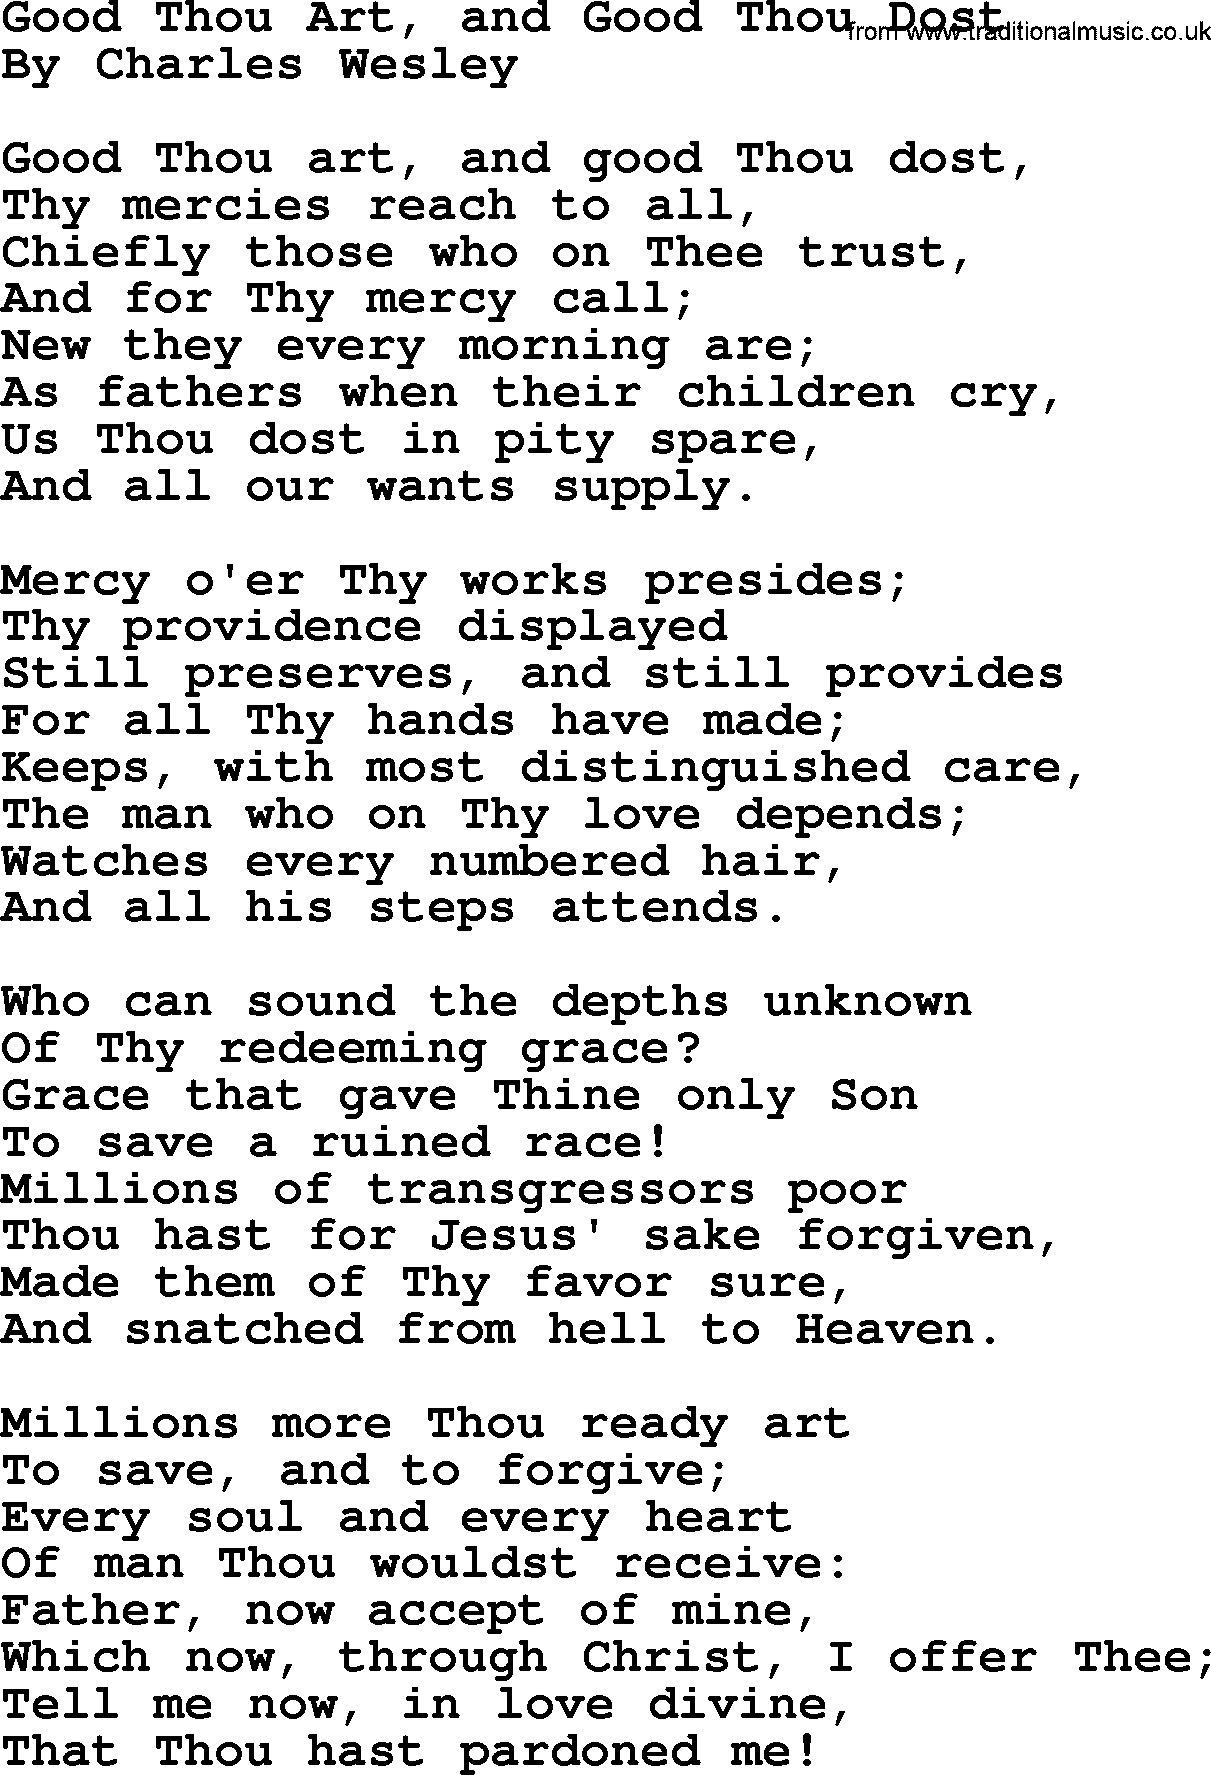 Charles Wesley hymn: Good Thou Art, And Good Thou Dost, lyrics